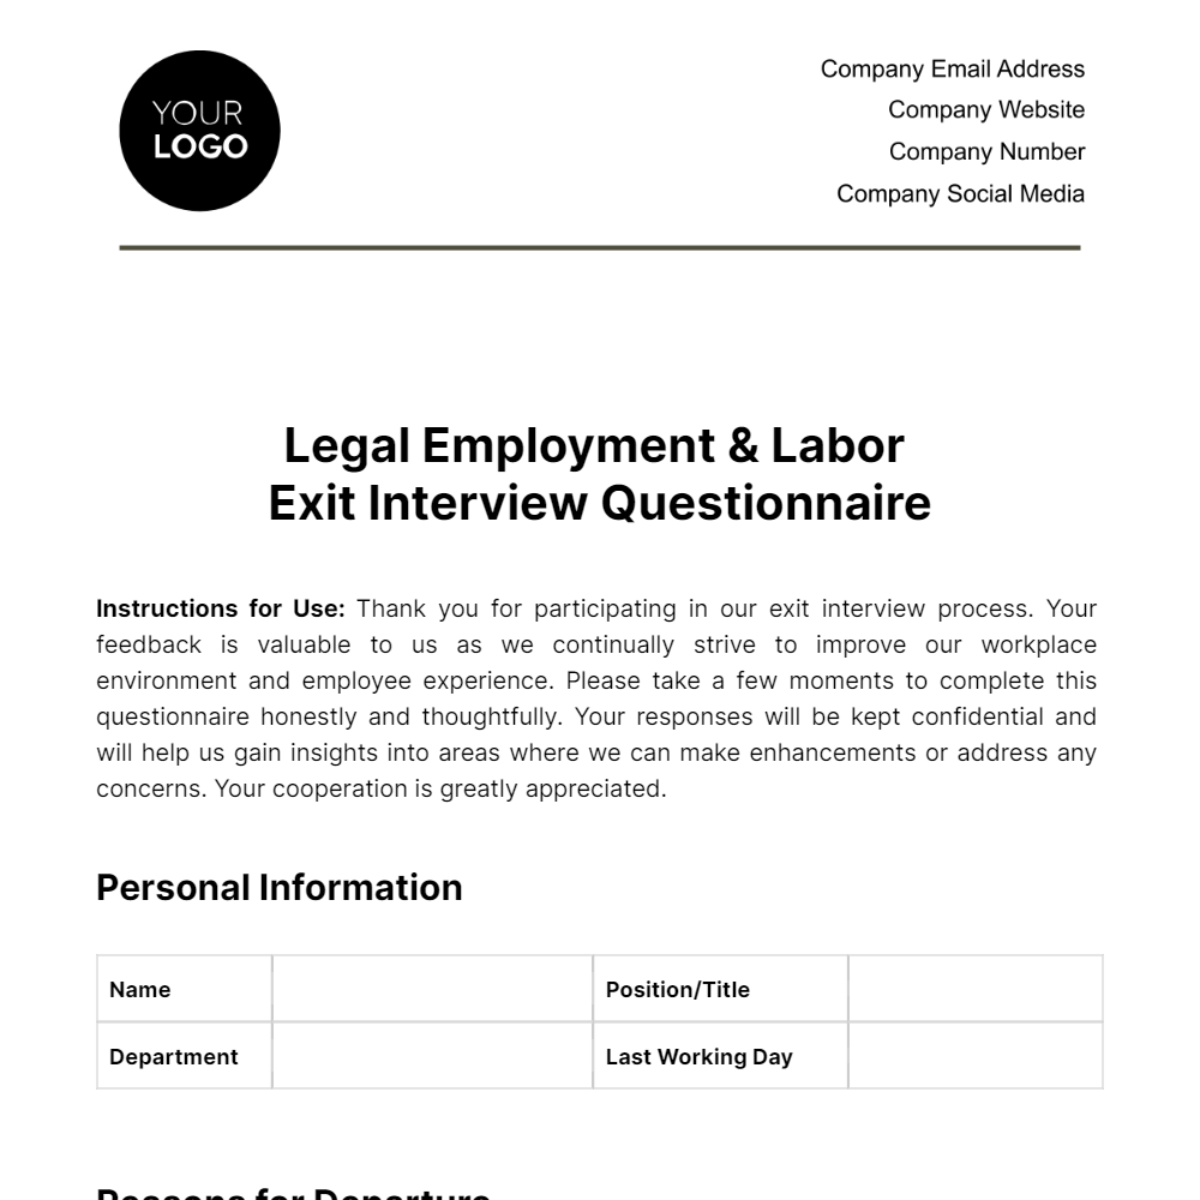 Free Legal Employment & Labor Exit Interview Questionnaire Template